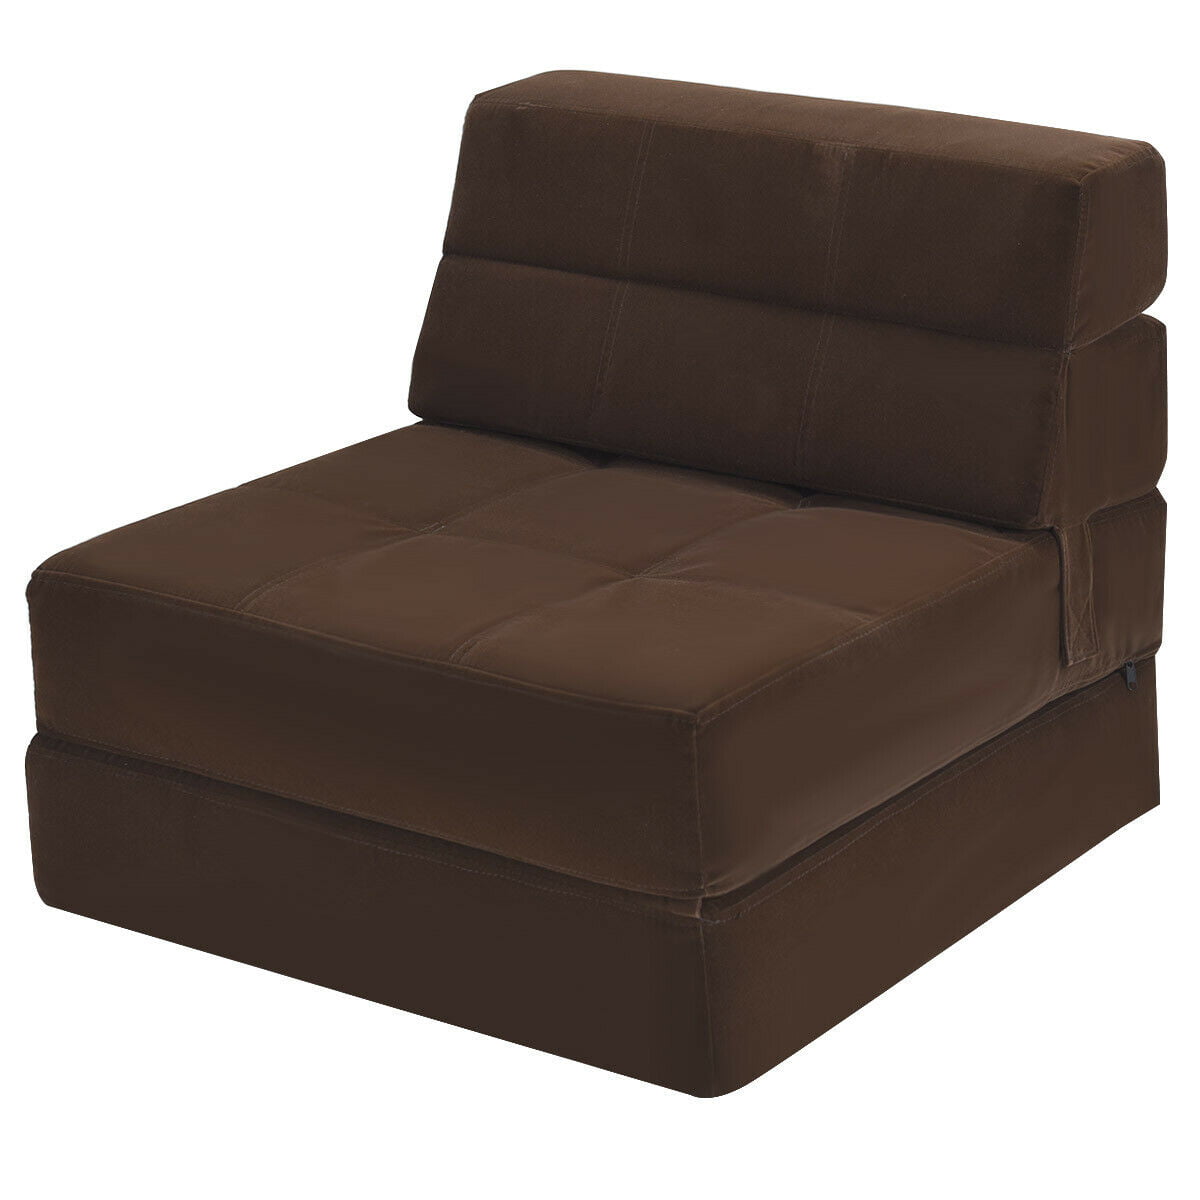 Convertible Single Sleeper Sofa Bed Recliner Lounger W/ Pillow Folding Brown 